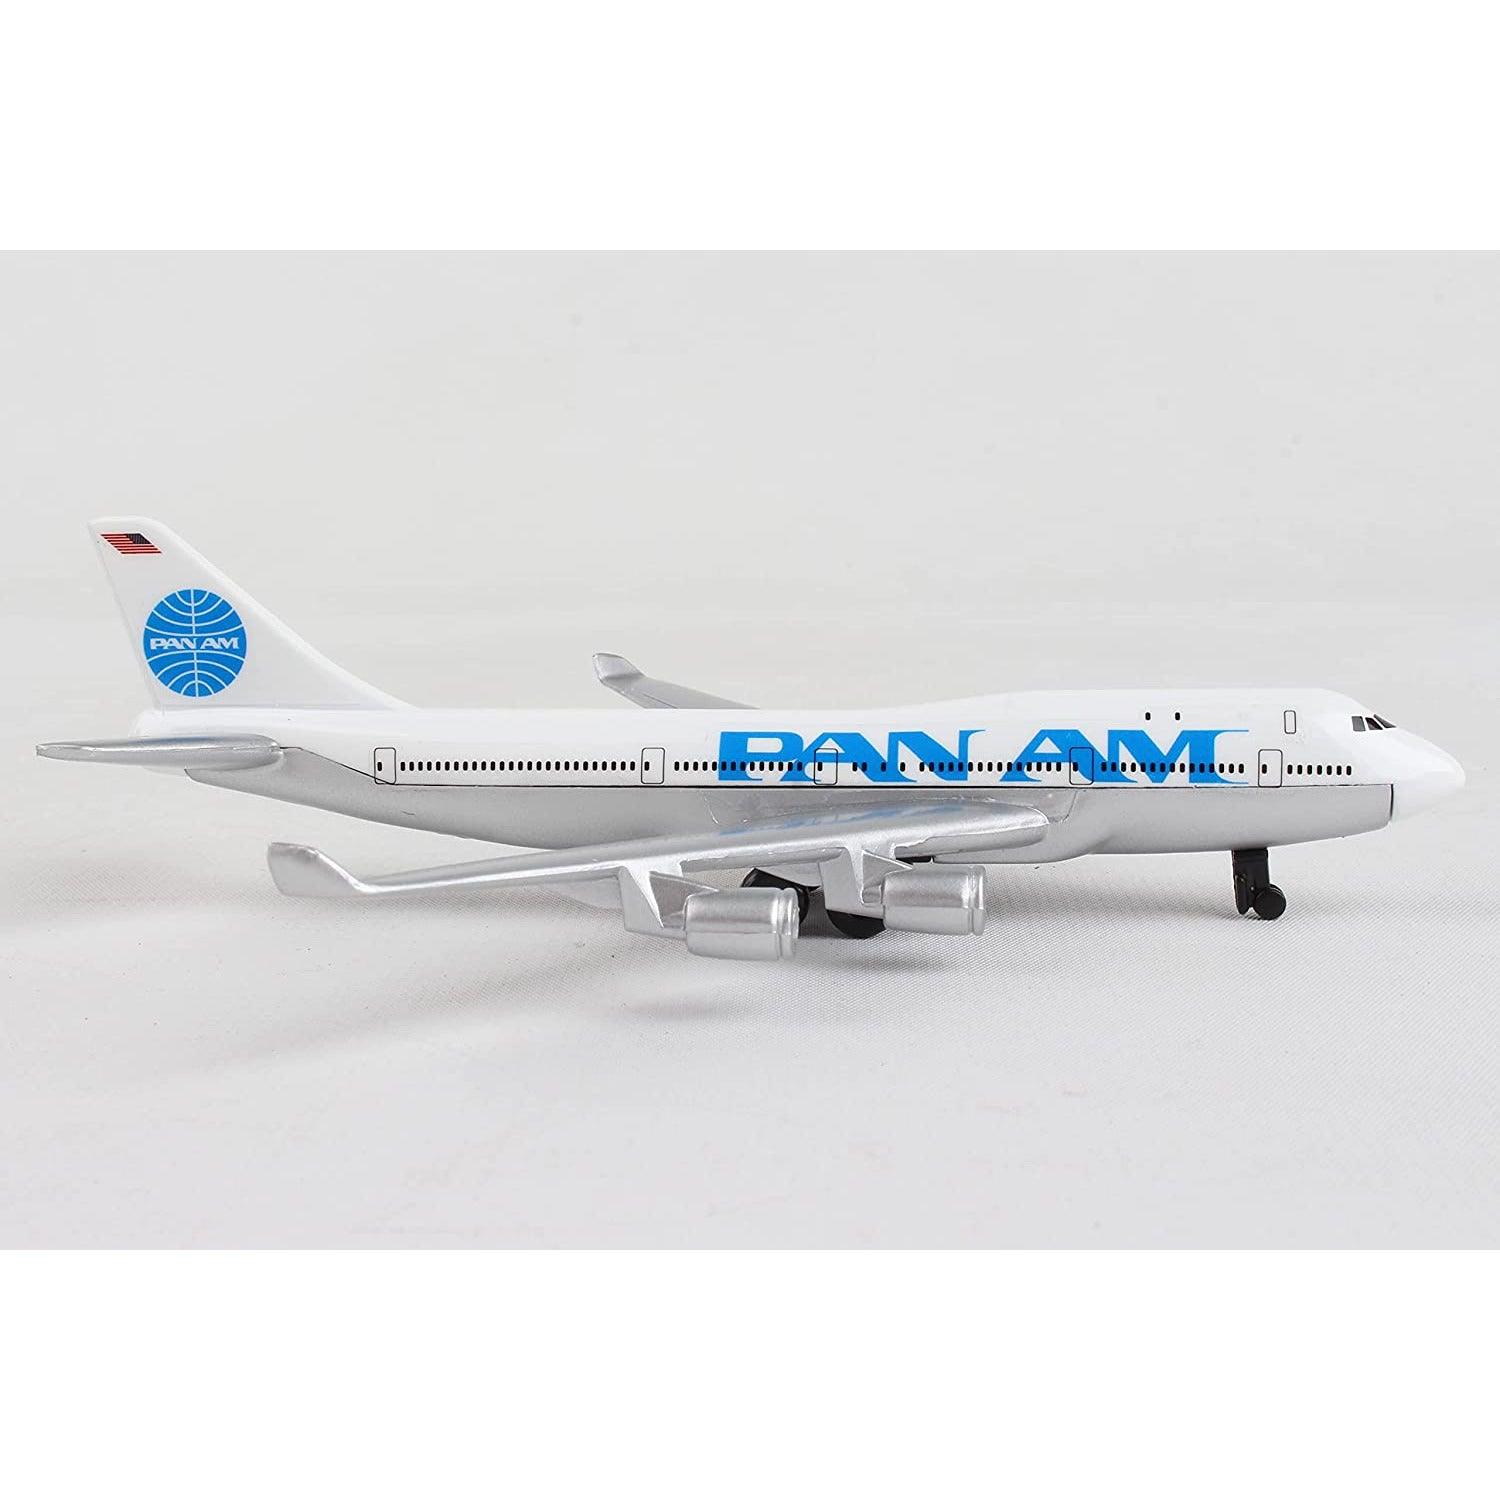 Daron Planes Pan Am Single Plane RT0314 - White - BumbleToys - 6+ Years, Boys, EXO, Flying, Girls, Pre-Order